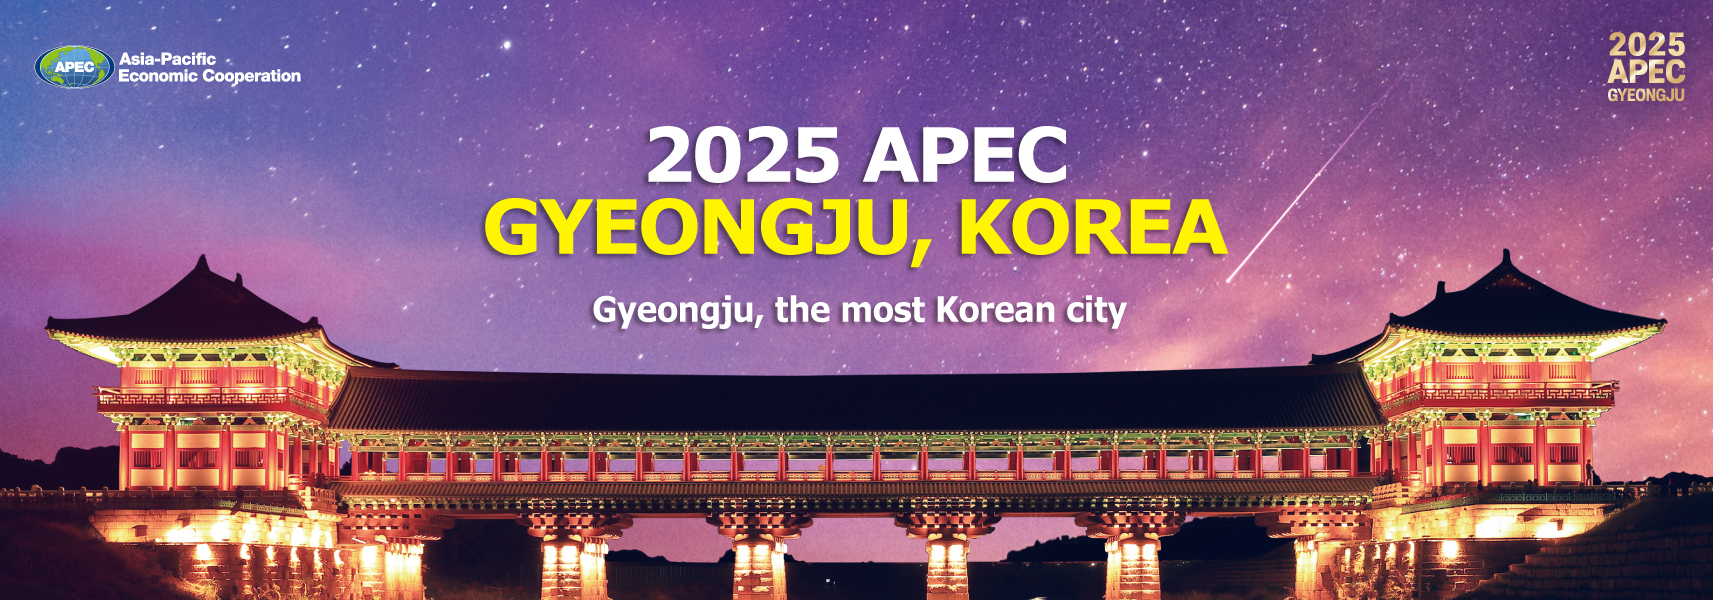 2025 APEC GYEONGJU, KOREA